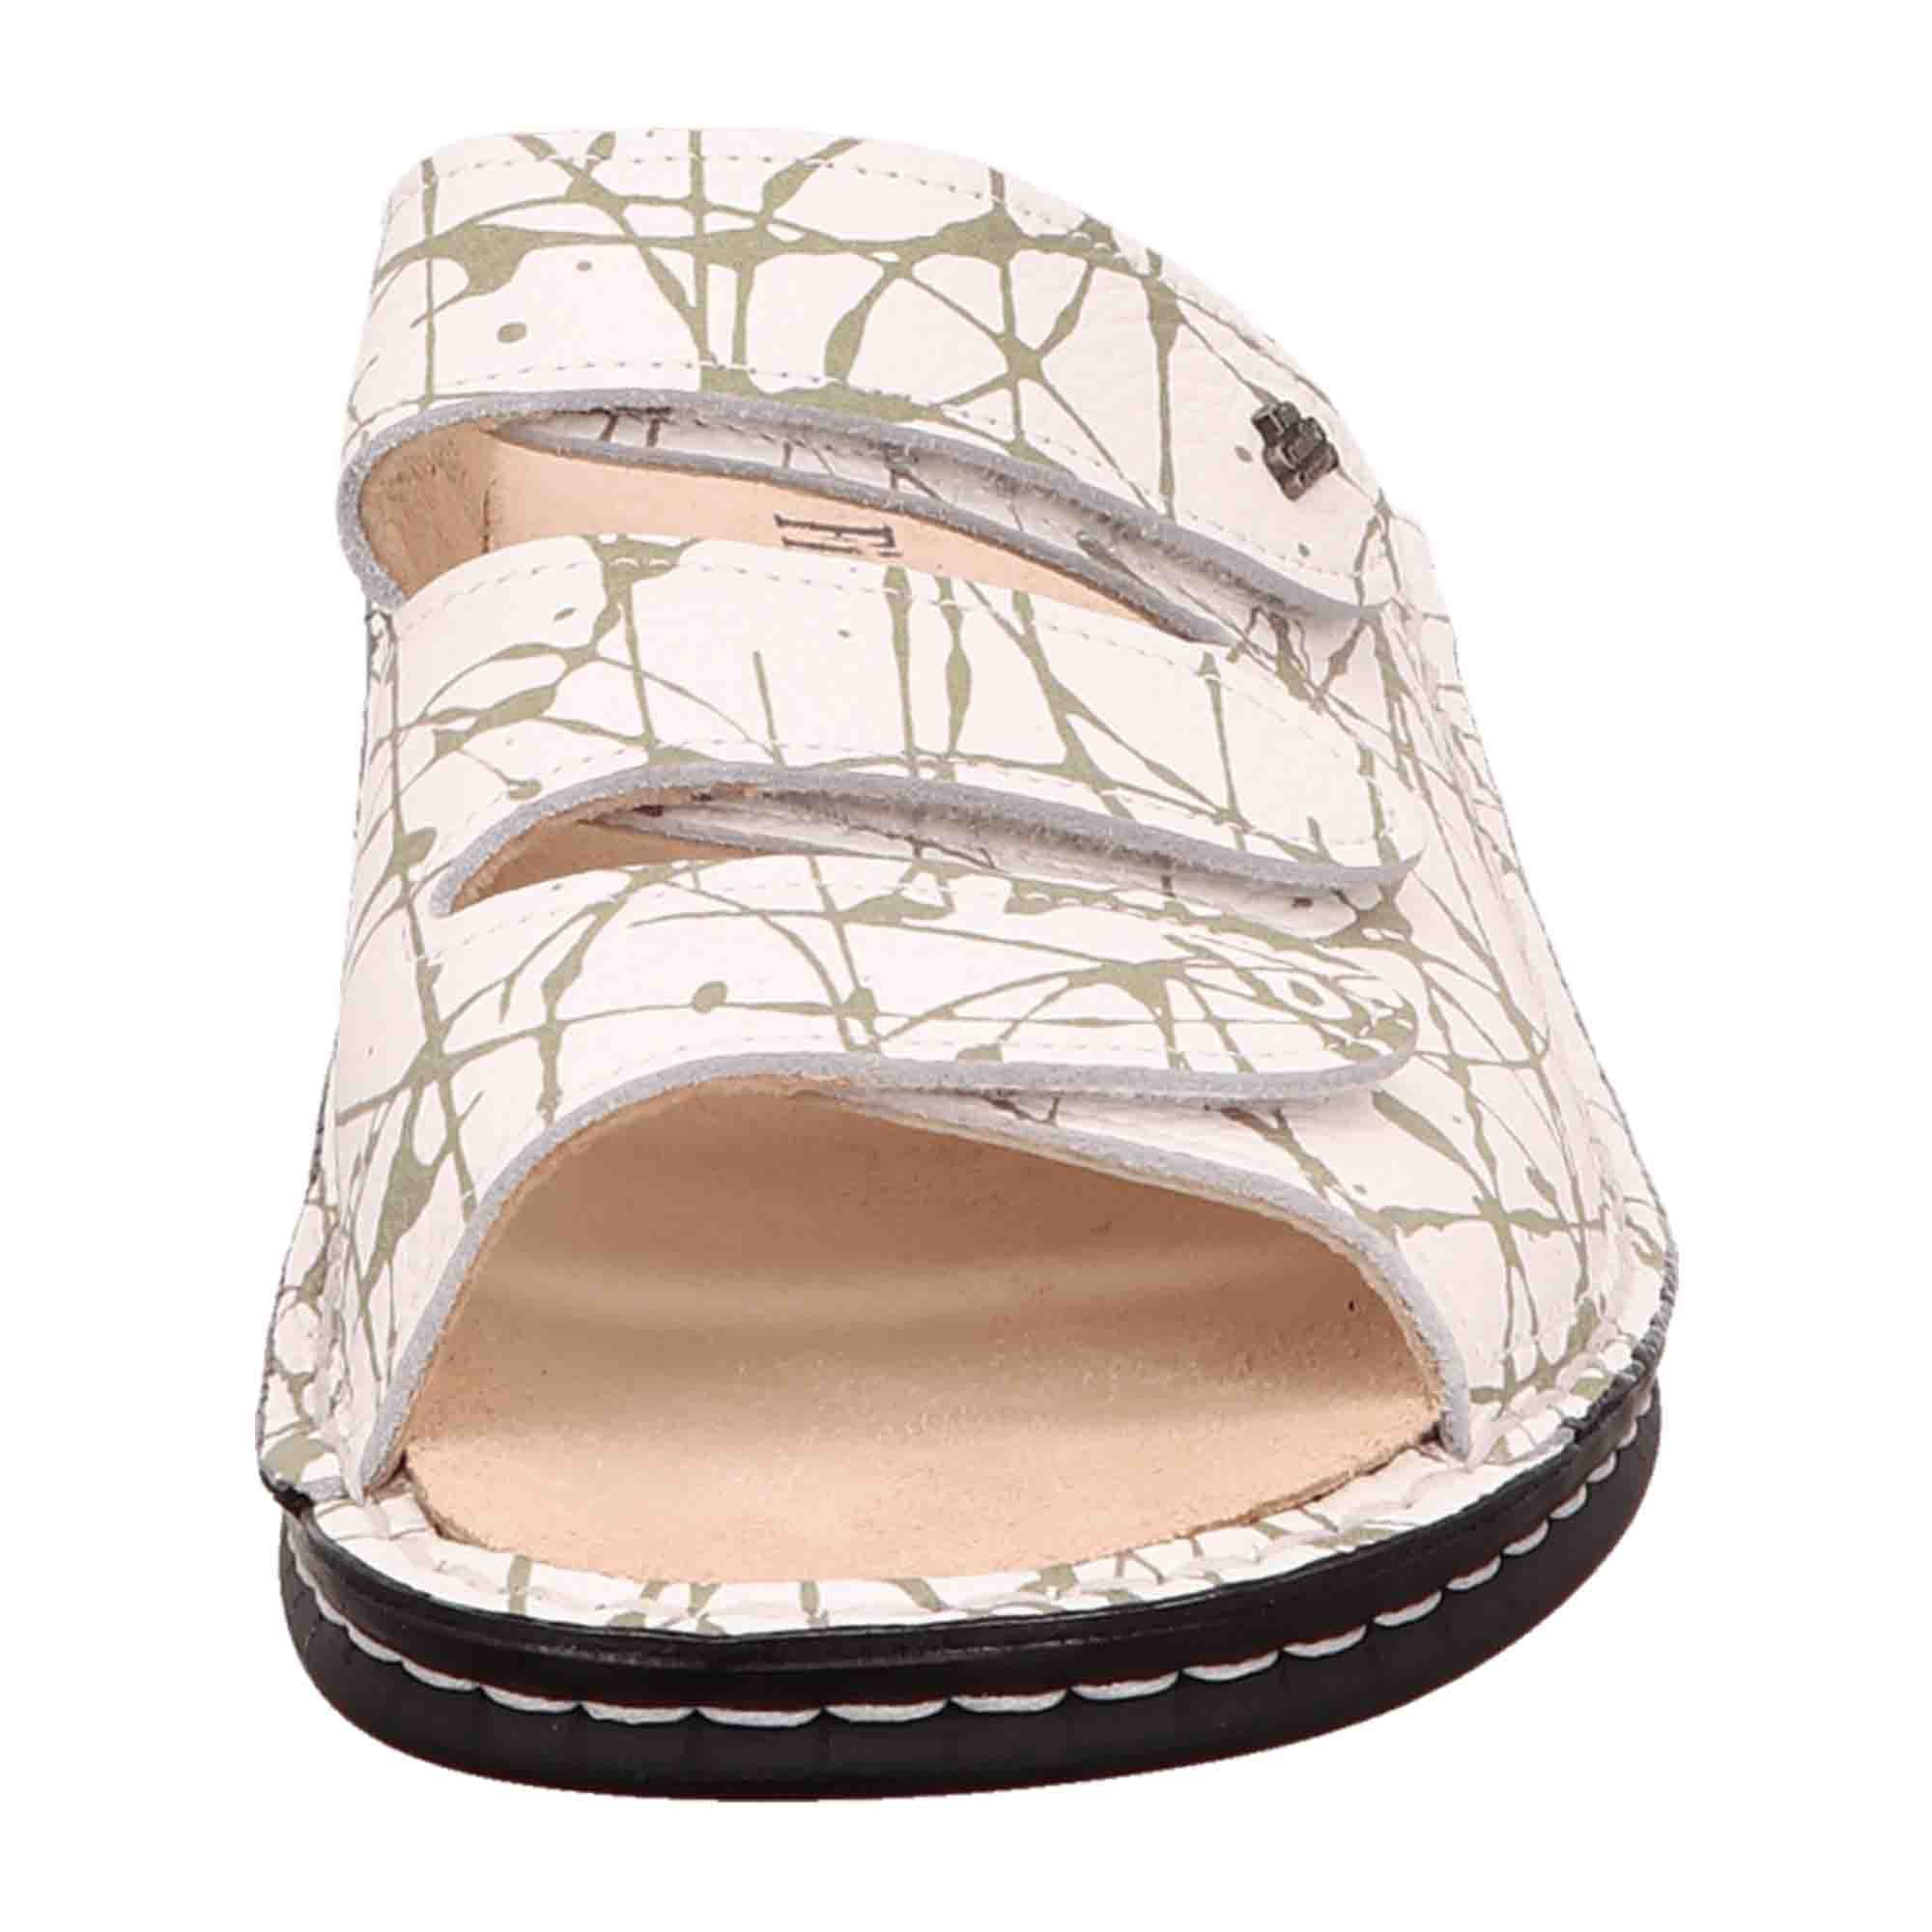 Finn Comfort Hellas Nature White Leather Slide Sandals for Women - Stylish & Comfortable Summer Footwear